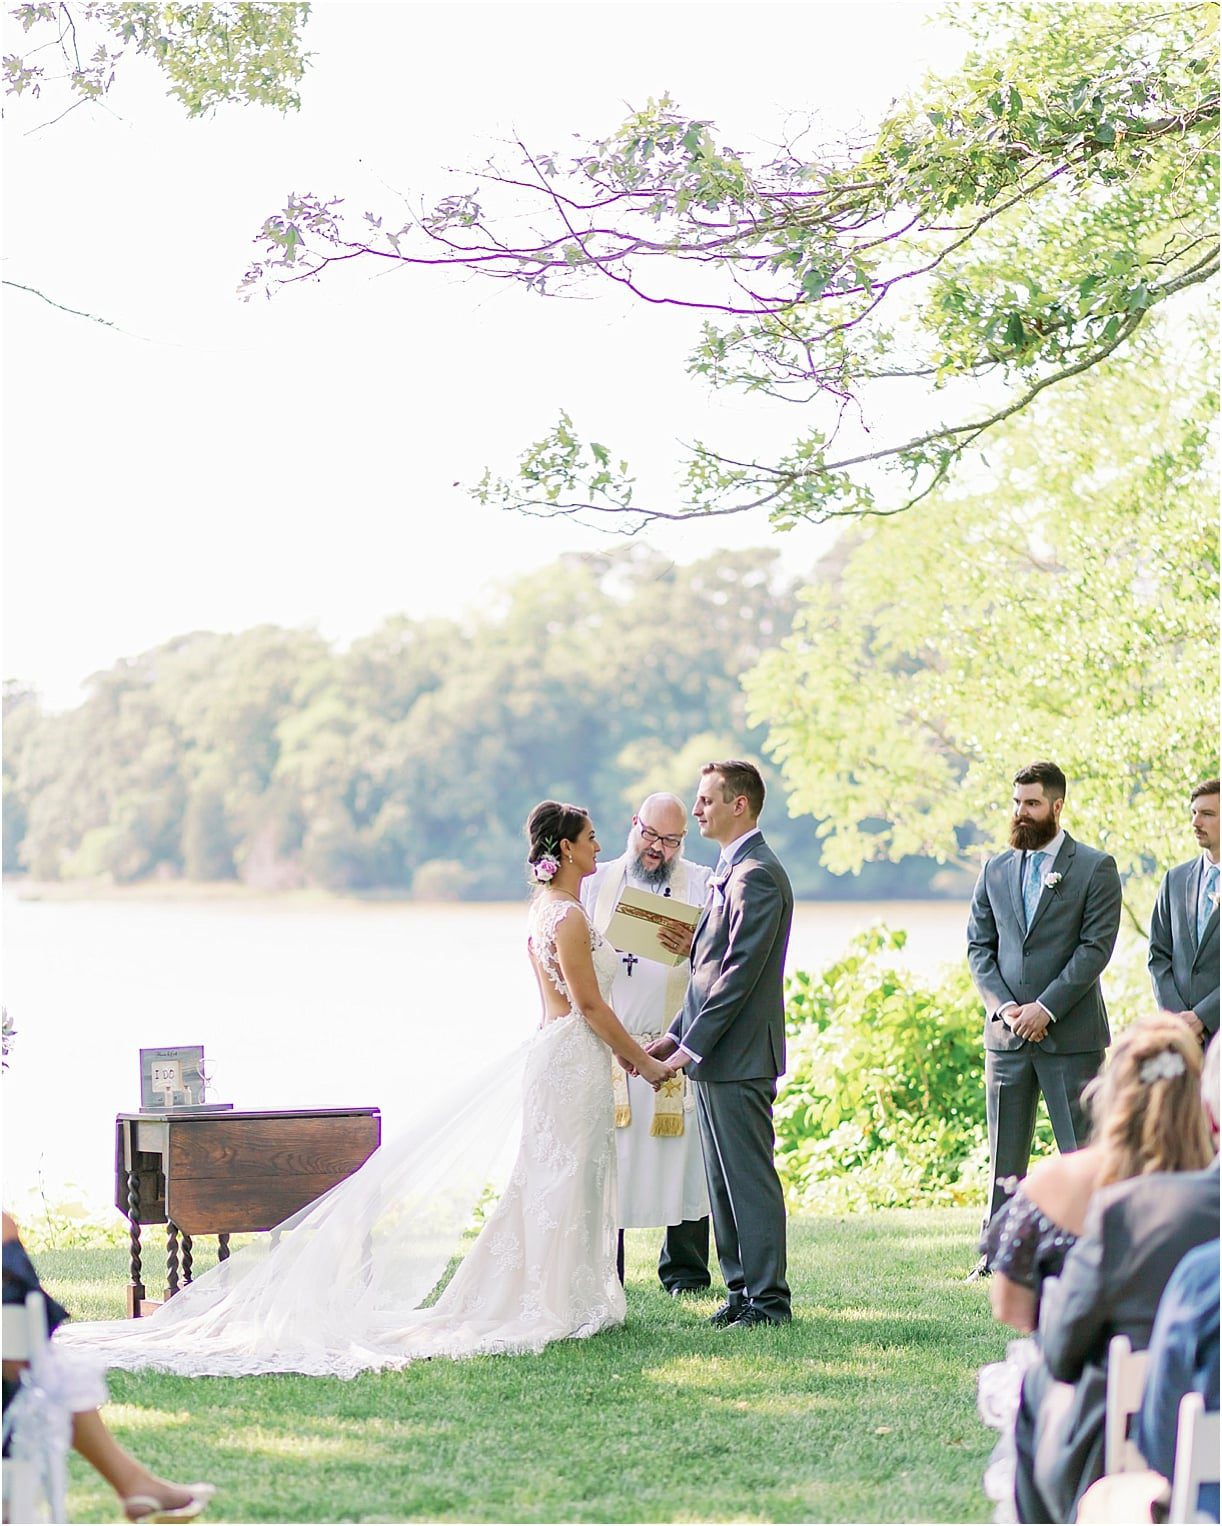 Cape Charles Wedding Venues | Blue Wedding | Hill City Bride Virginia Weddings Blog | Ceremony